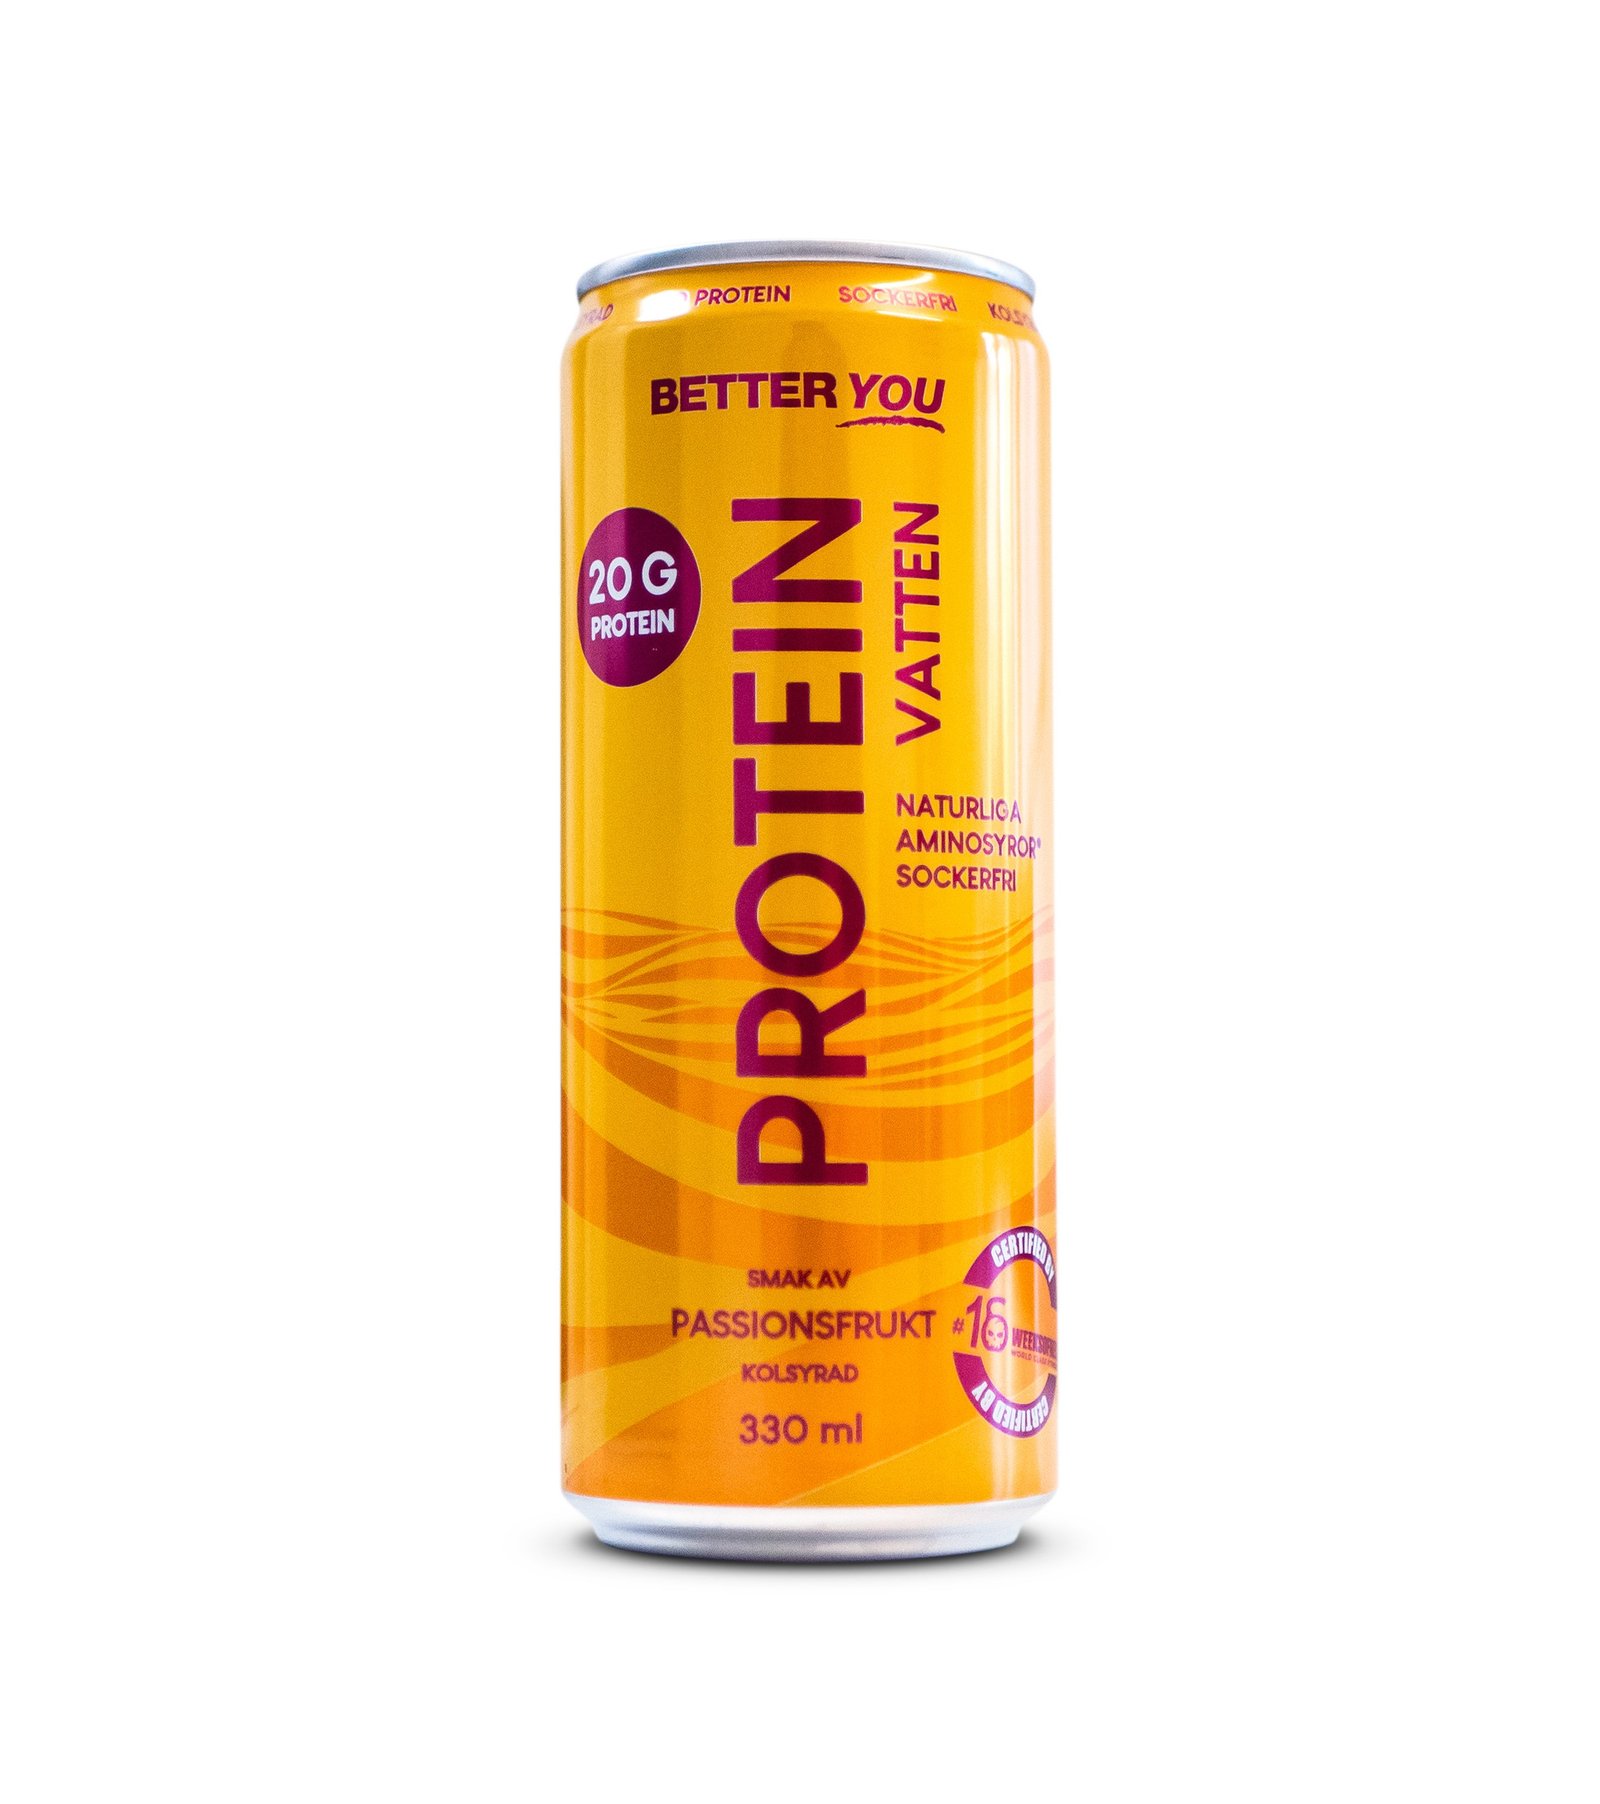 Better You Proteinvatten Passionsfrukt  330 ml